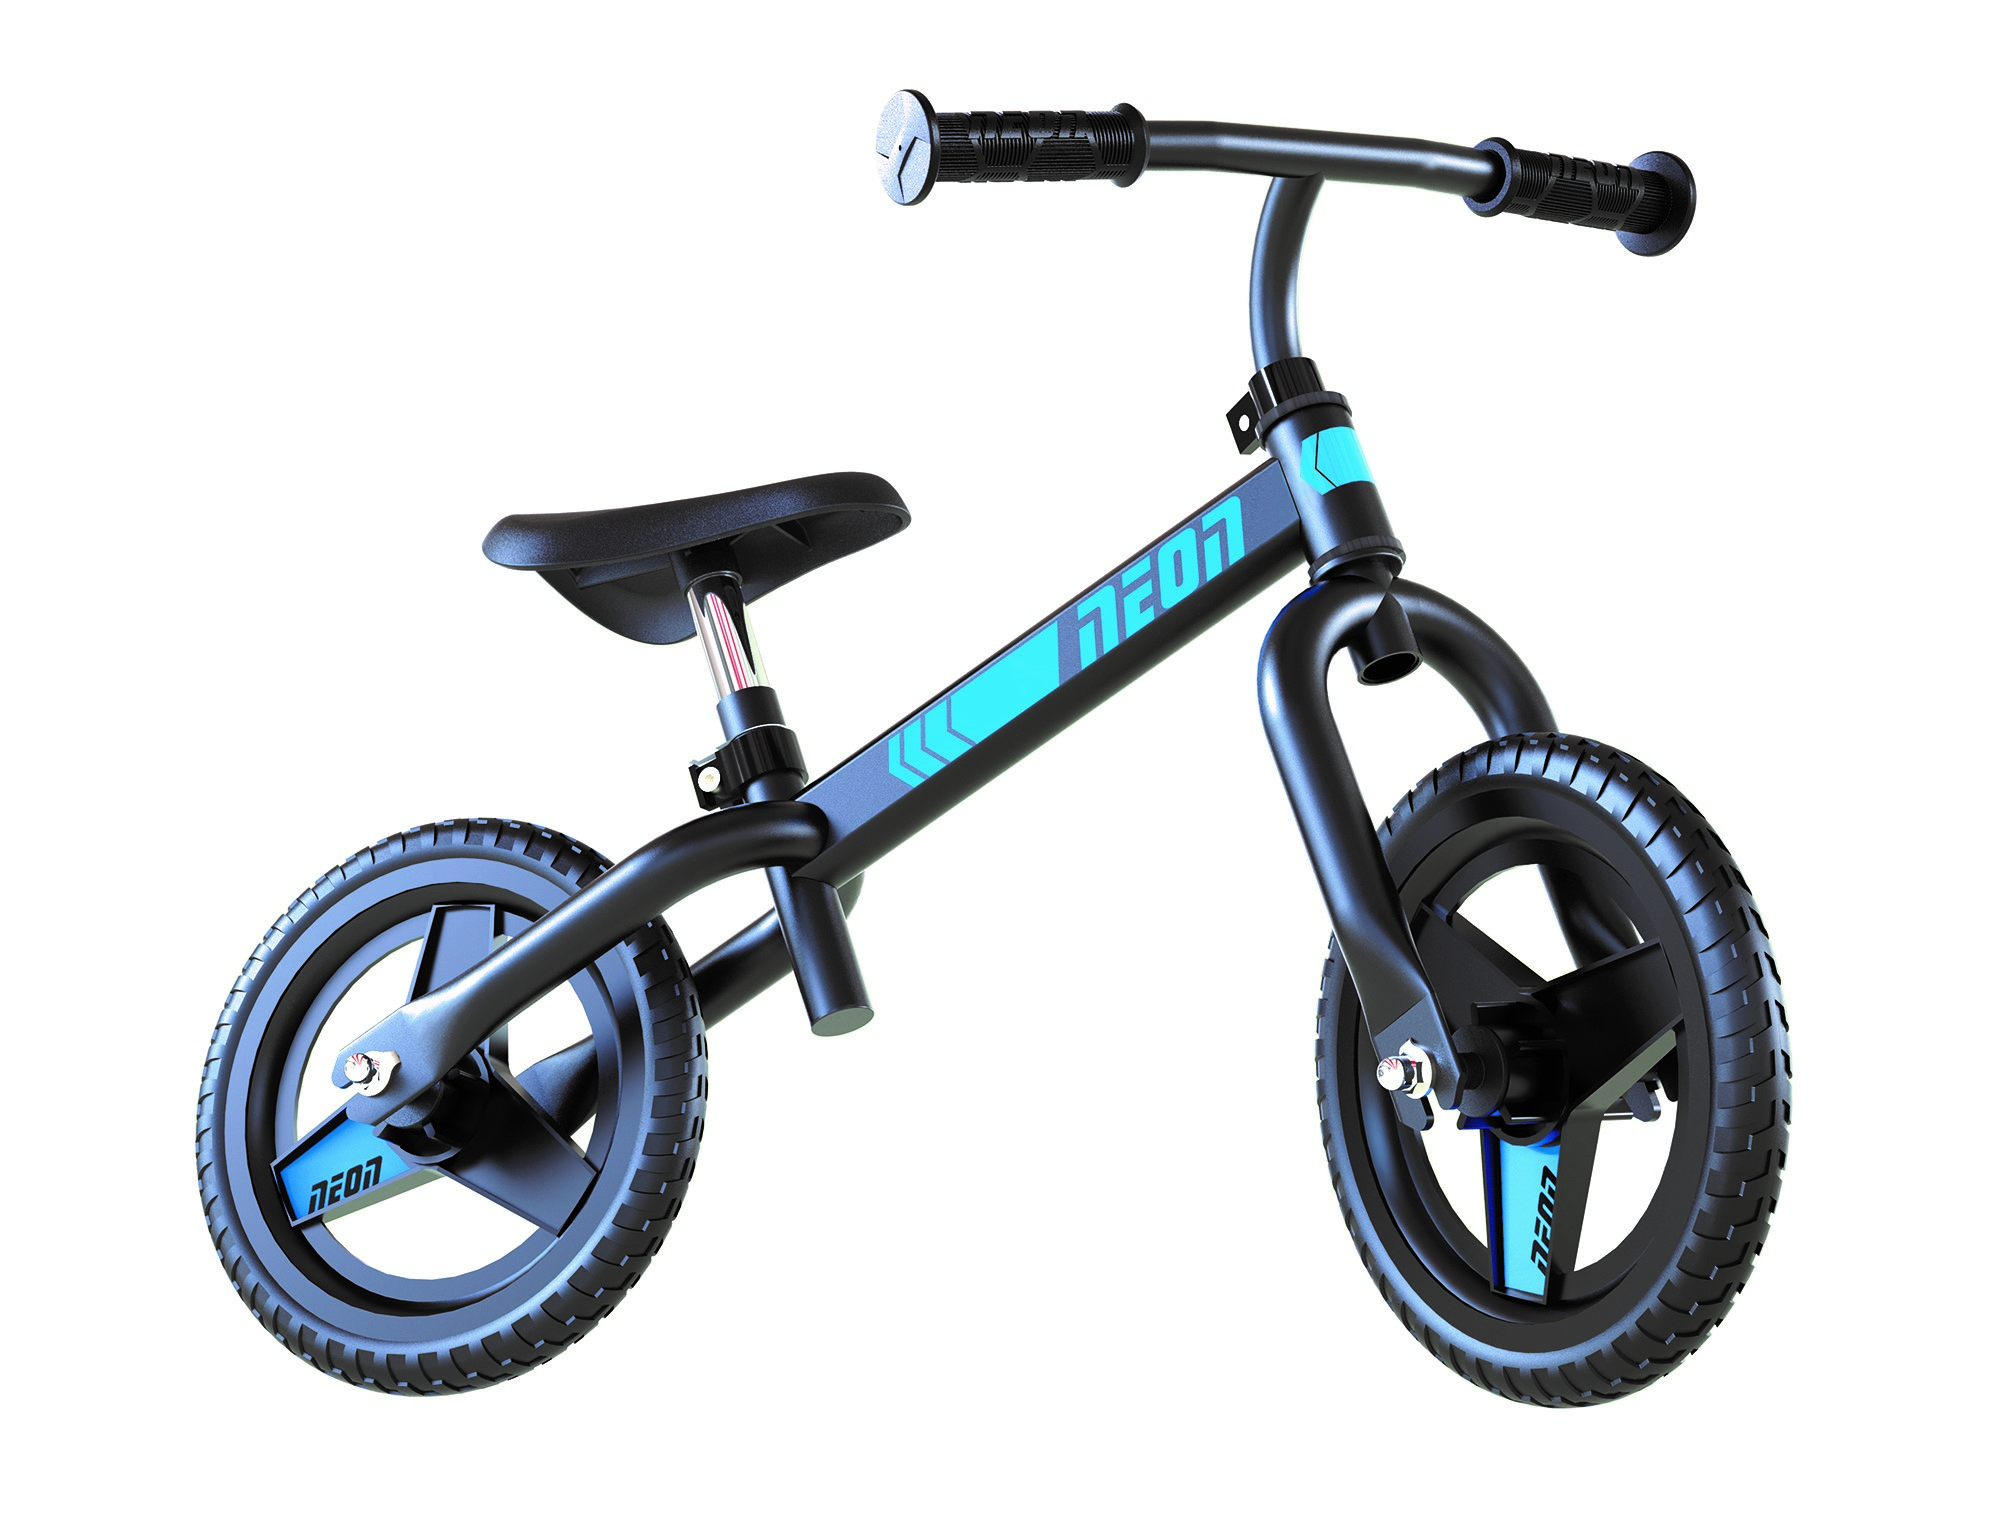 Yvolution Neon Balance Bike 10inches | No Pedal Bike | Boys Girls 2-4 Years (Blue/Black) - image 1 of 5